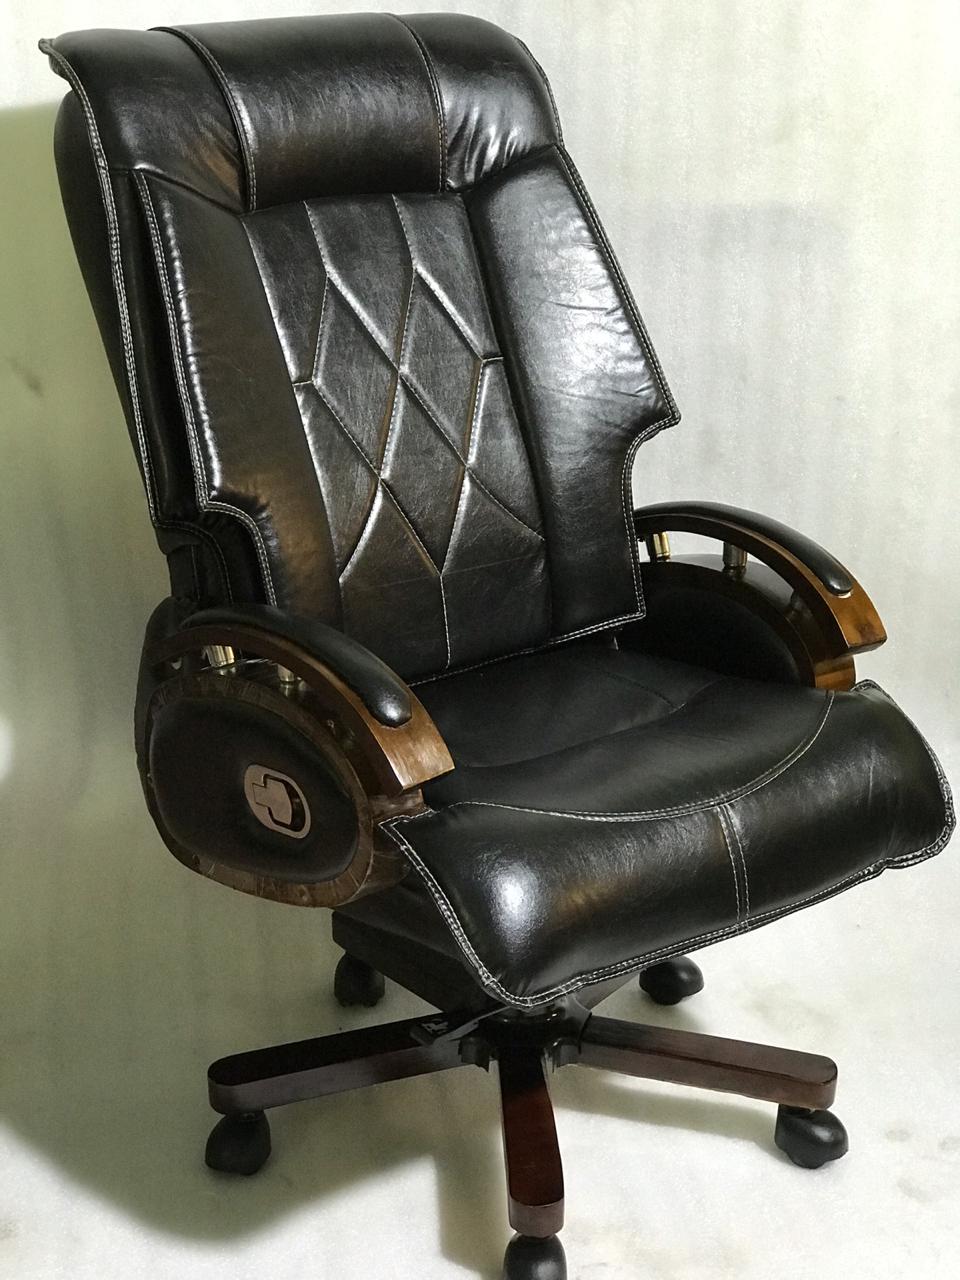 FC118- Recliner Chair